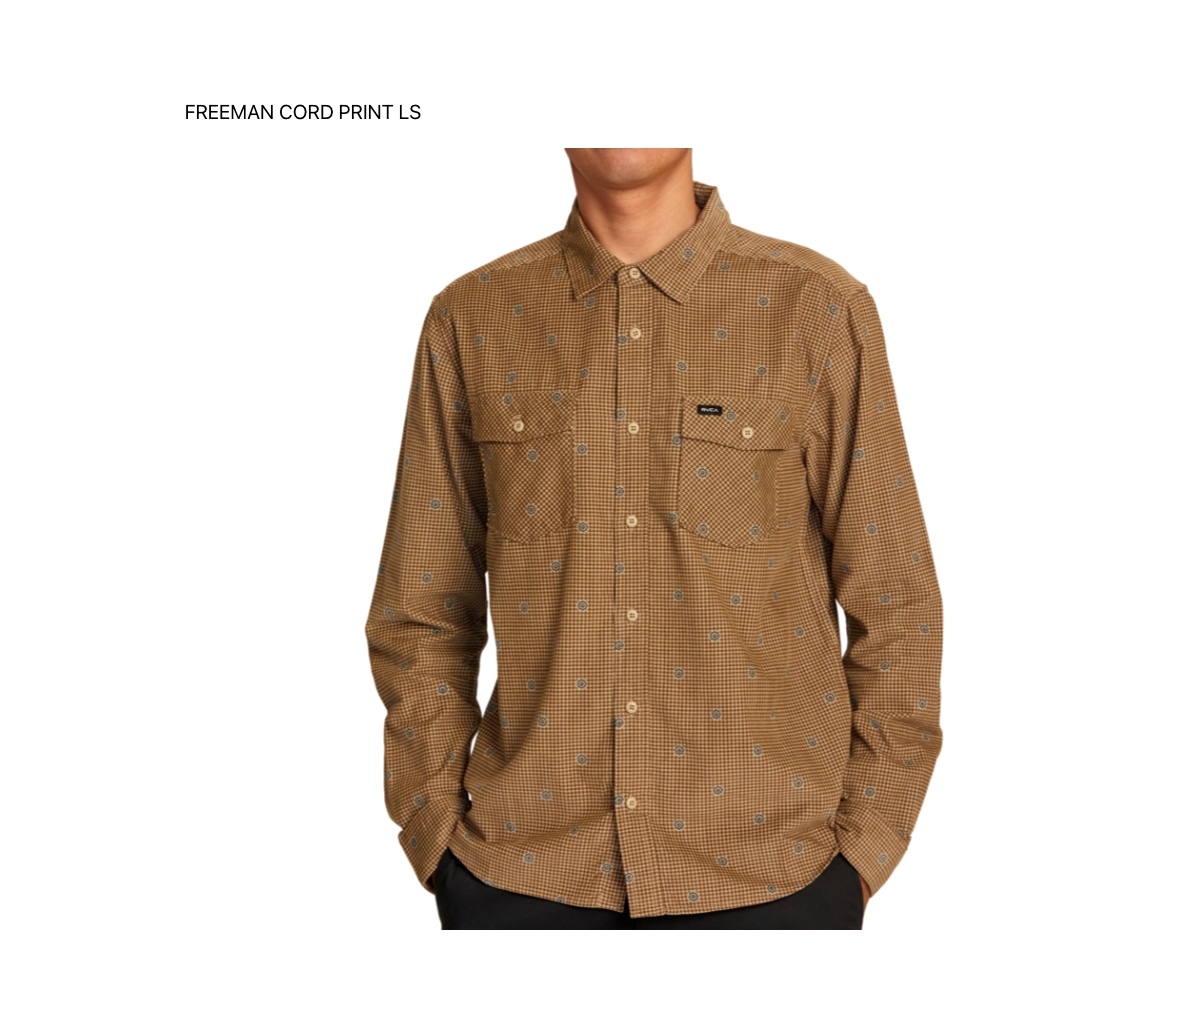 Rvca Men's Freeman Cord Print Long Sleeve Shirt In Khaki